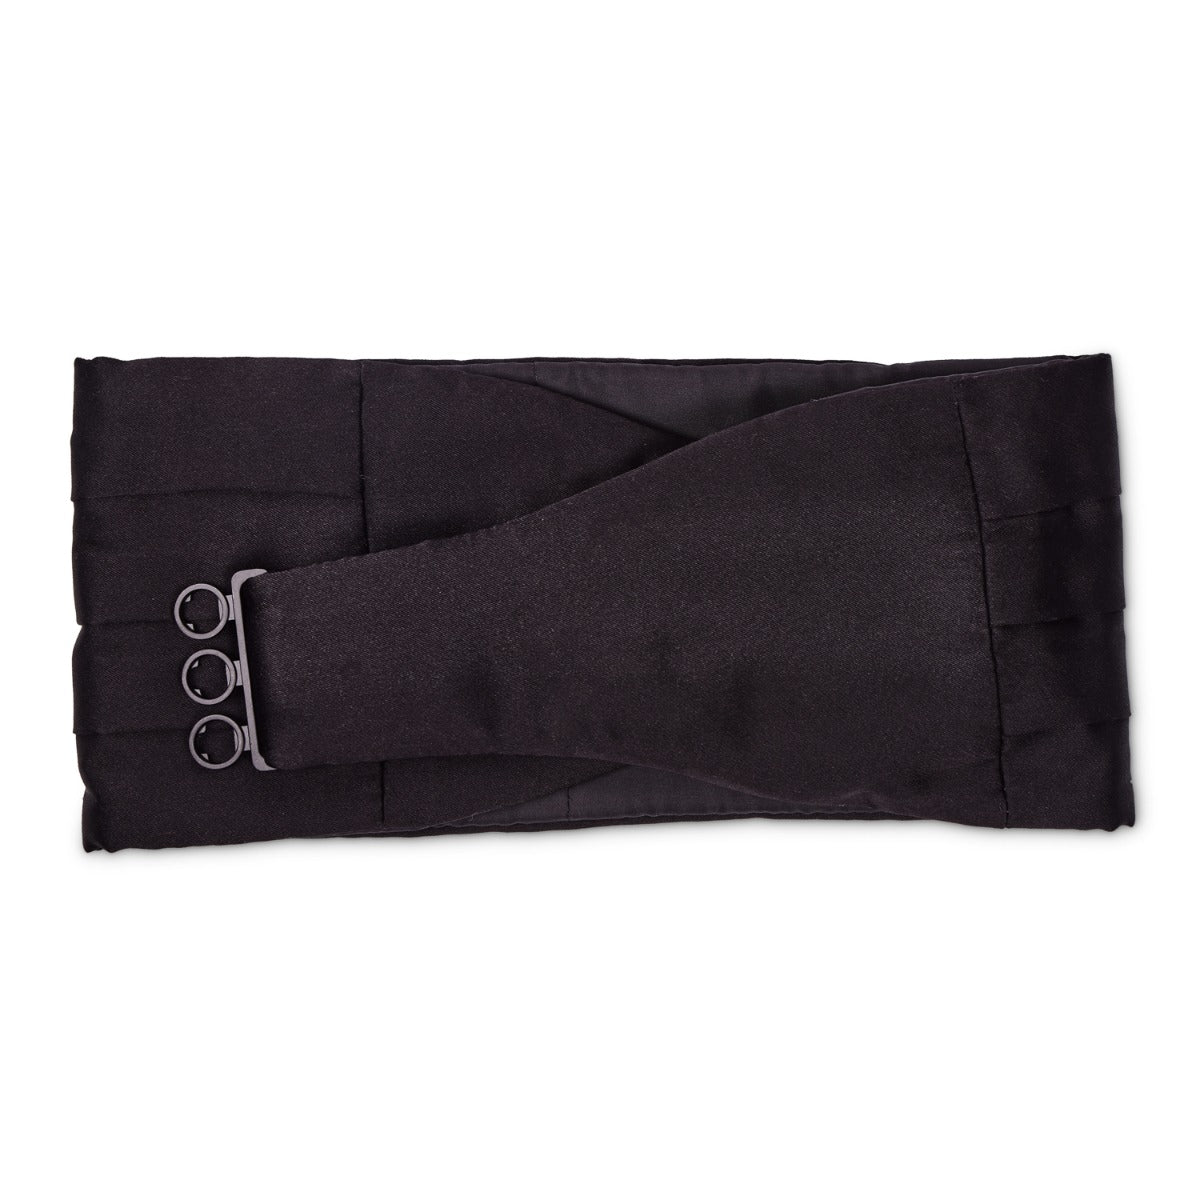 A Sovereign Grade Black Satin Cummerbund with a metal buckle, a formalwear accessory from KirbyAllison.com.